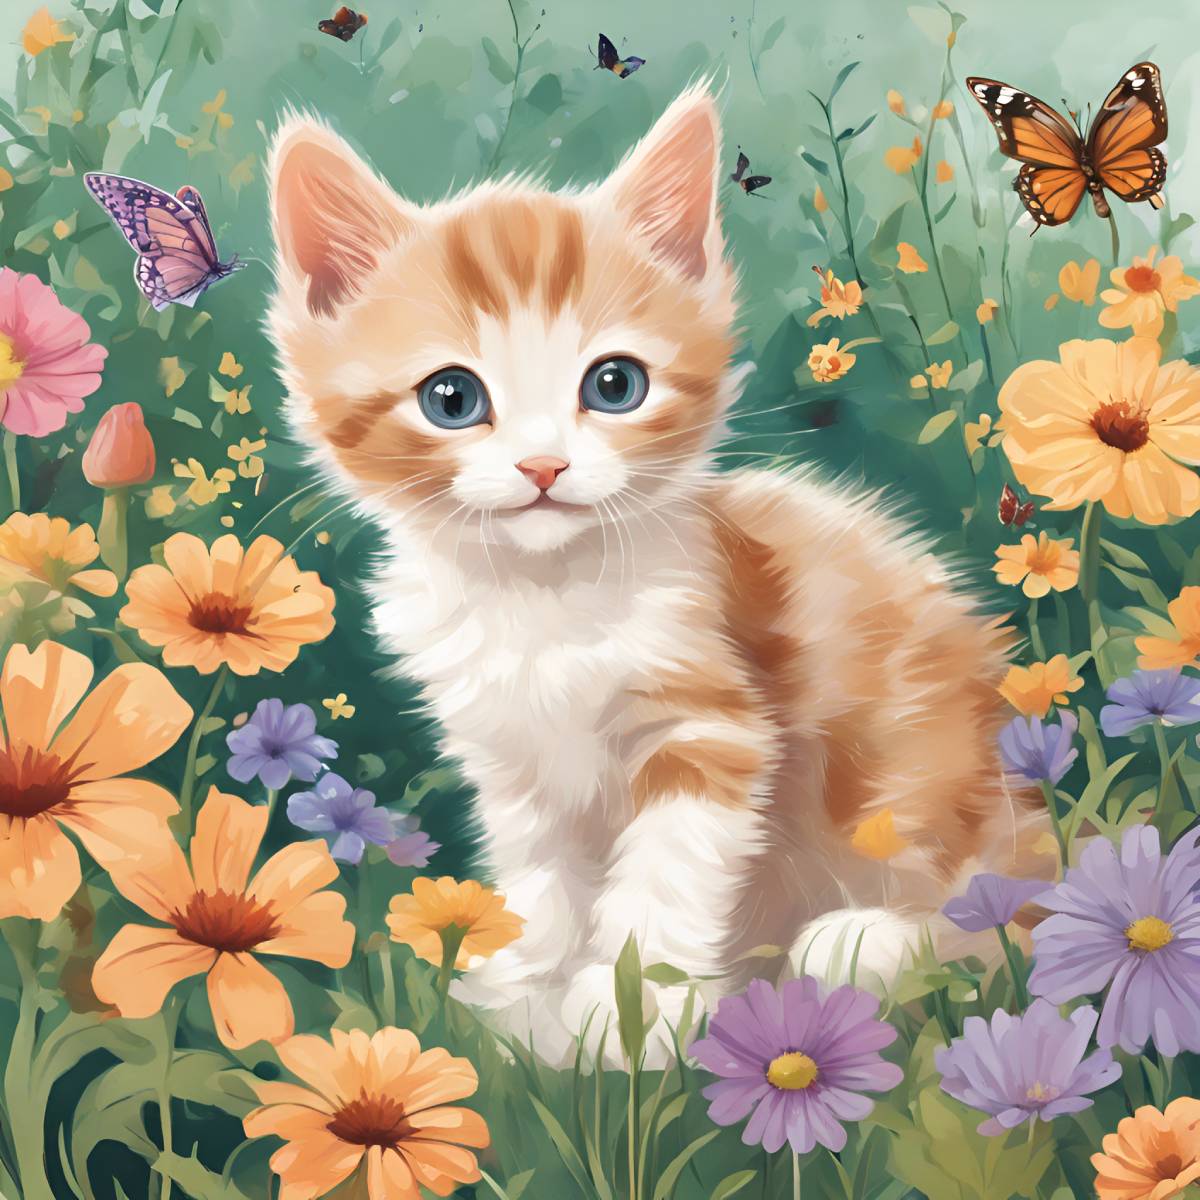 Diamonds-Wizard-Diamond-Painting-Kits-Animals-Cat-Kitten-in-a-Flower-Garden-original.jpg